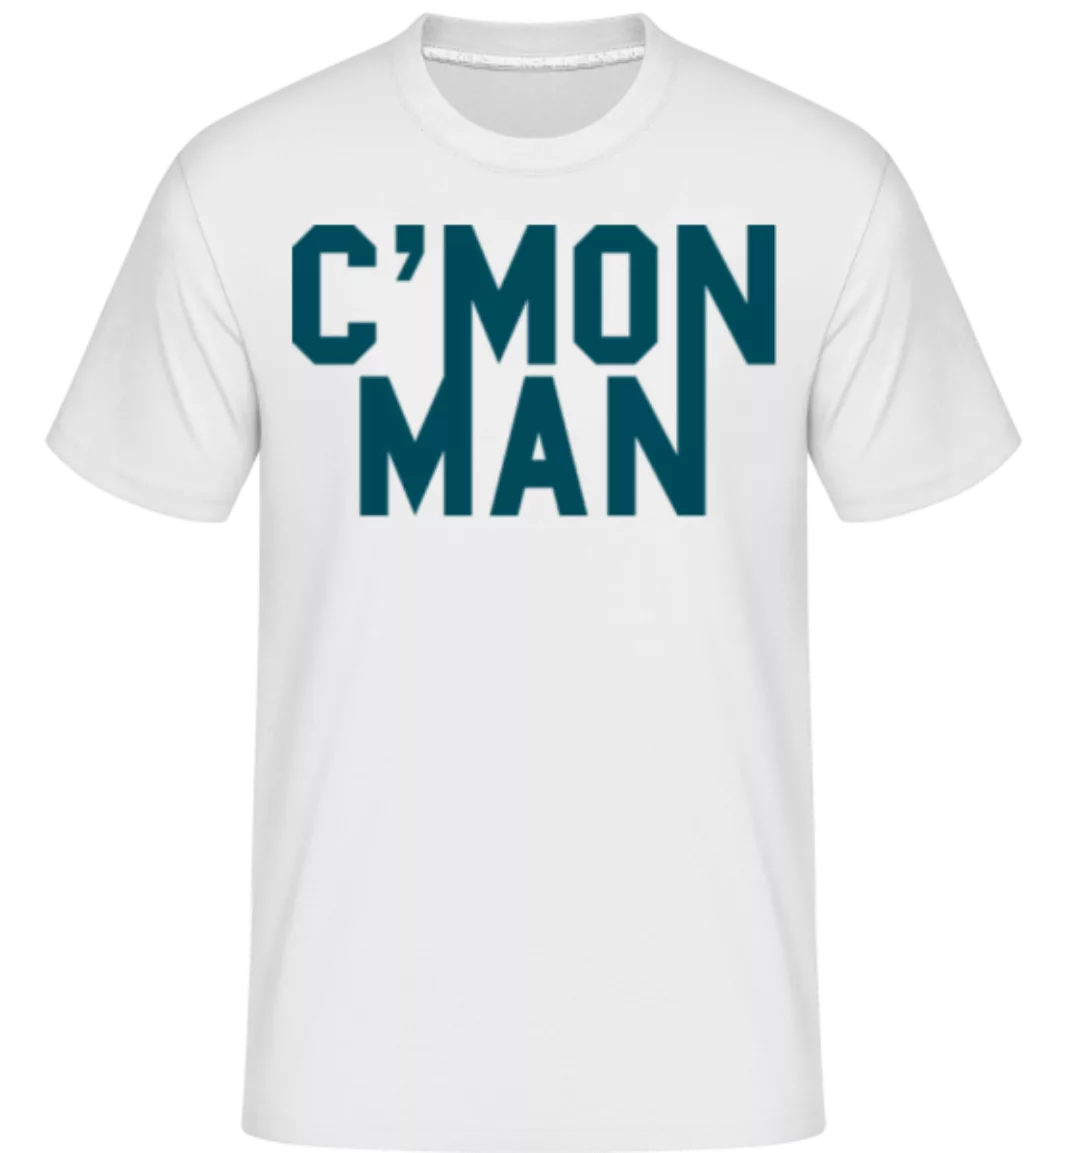 C'mon Man · Shirtinator Männer T-Shirt günstig online kaufen